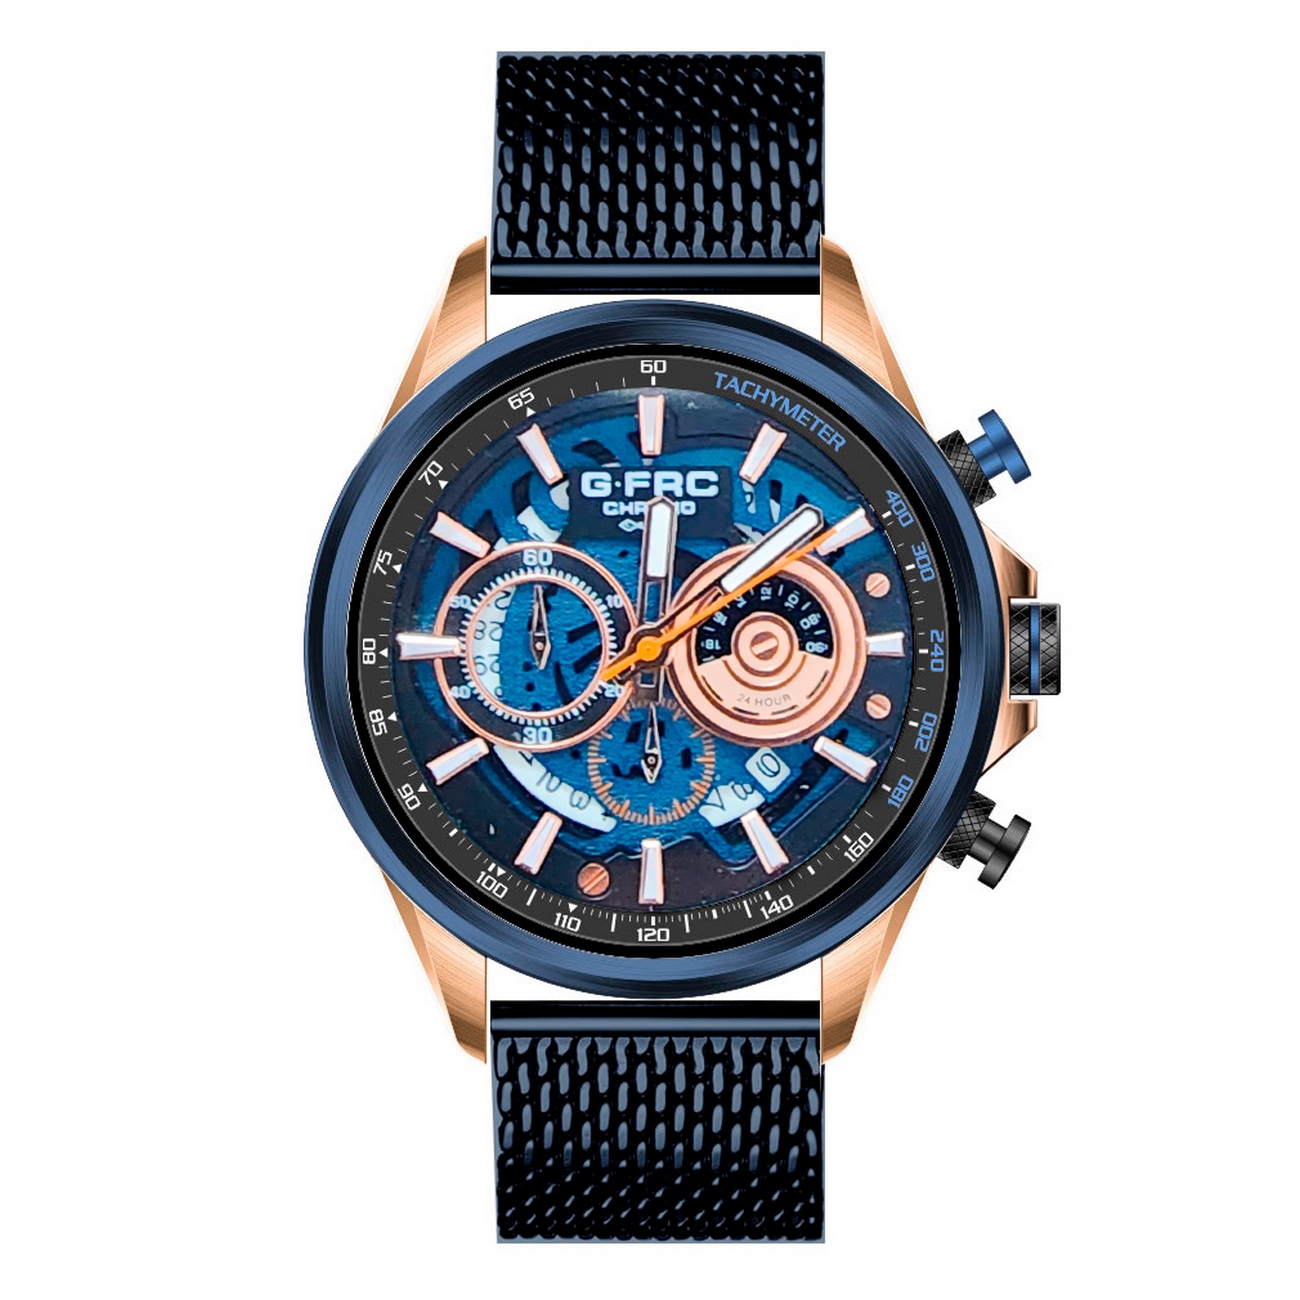 Reloj G-force Original H3718g Cronografo Negro + Estuche